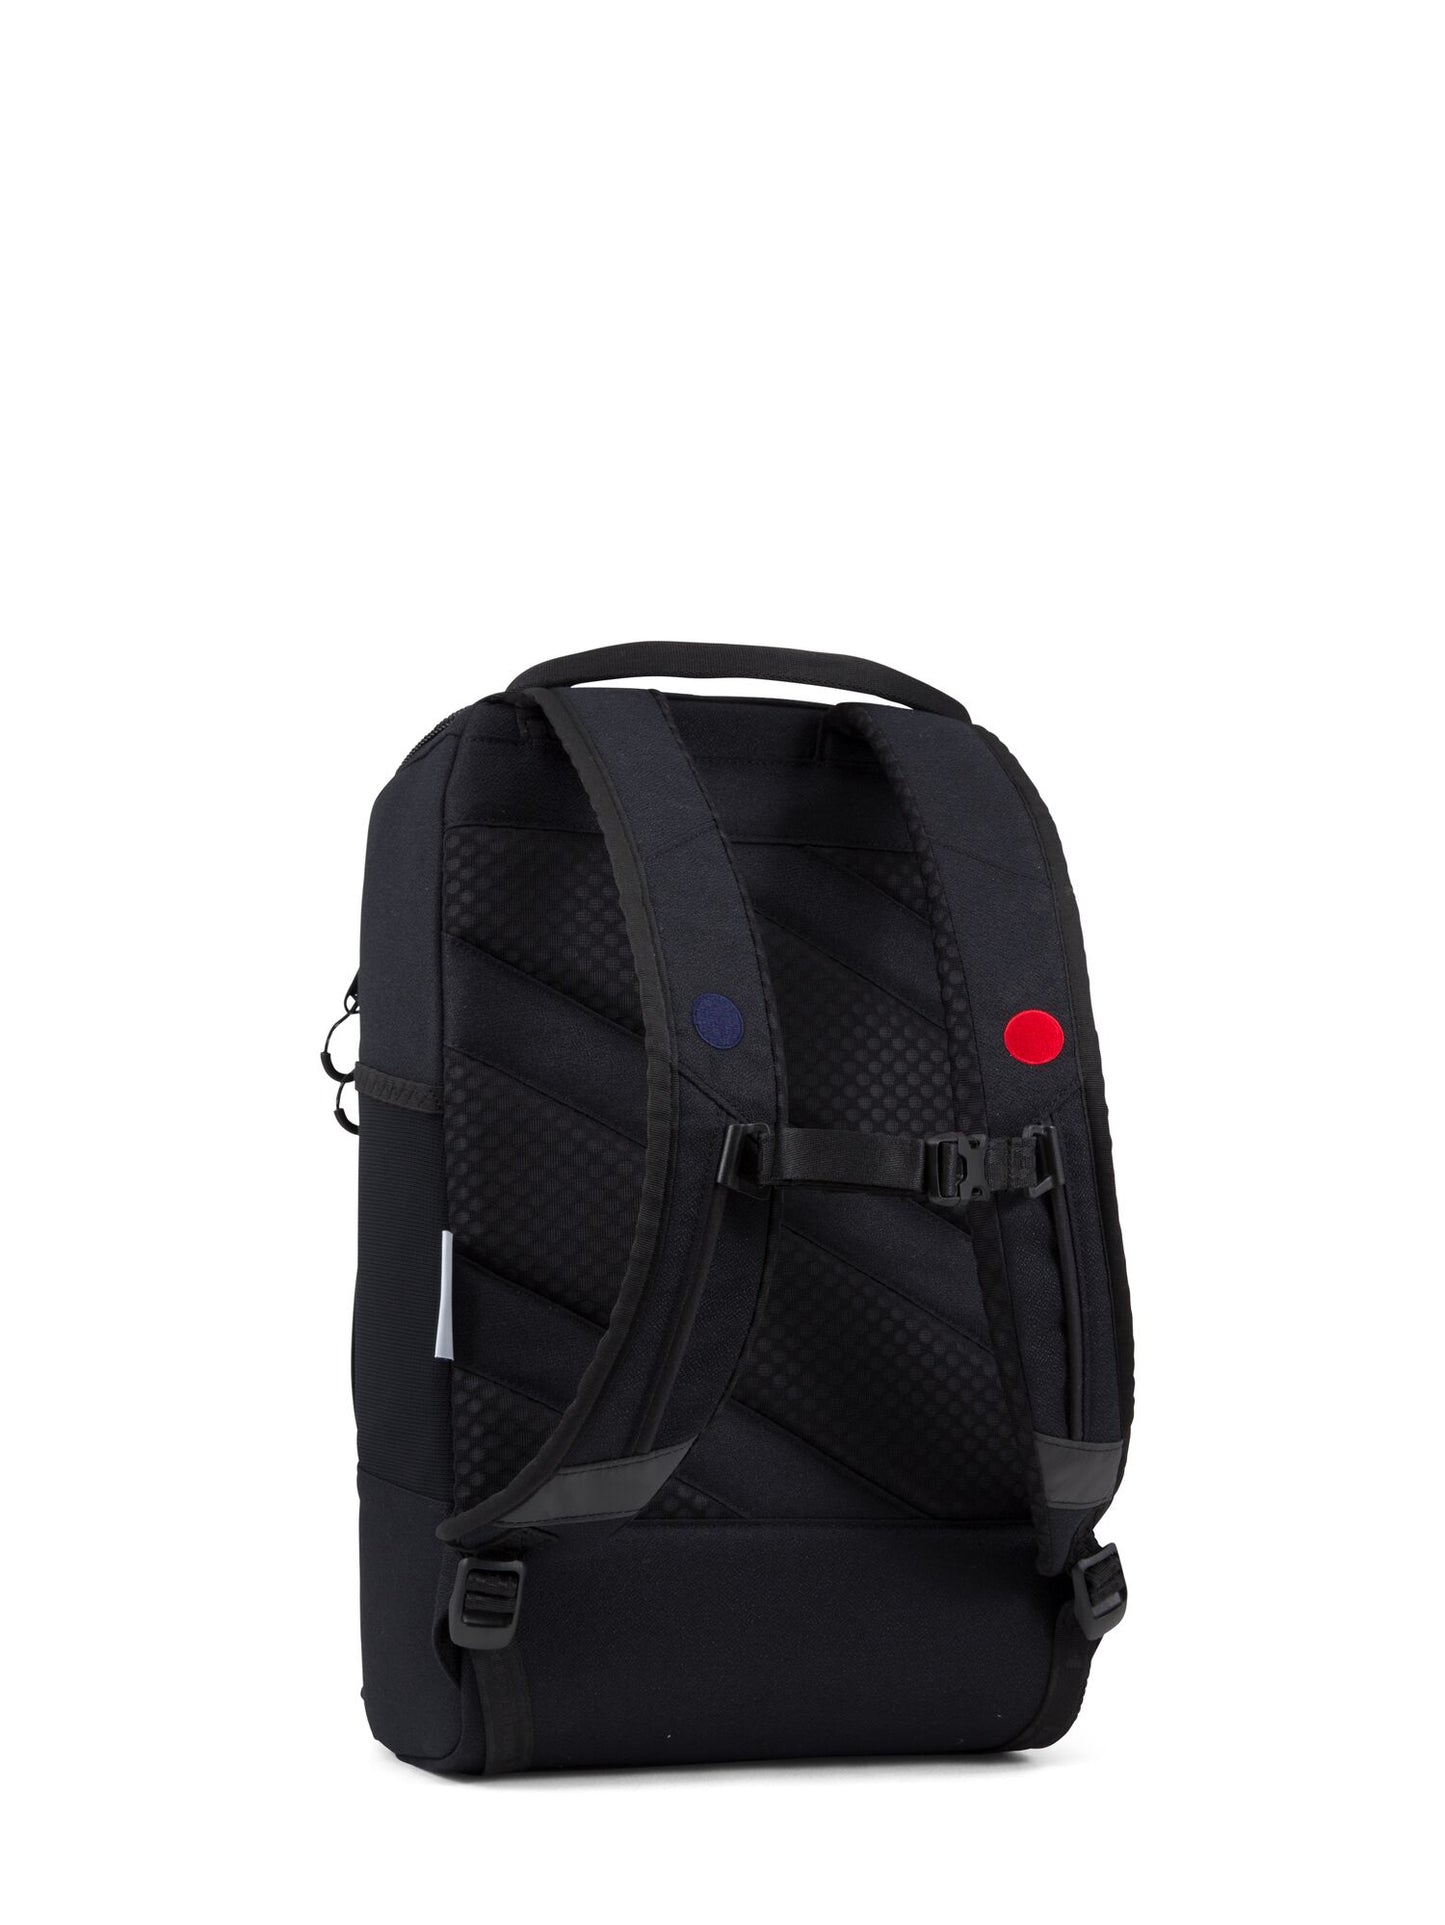 pinqponq-backpack-Cubik-Medium-Licorice-Black-back